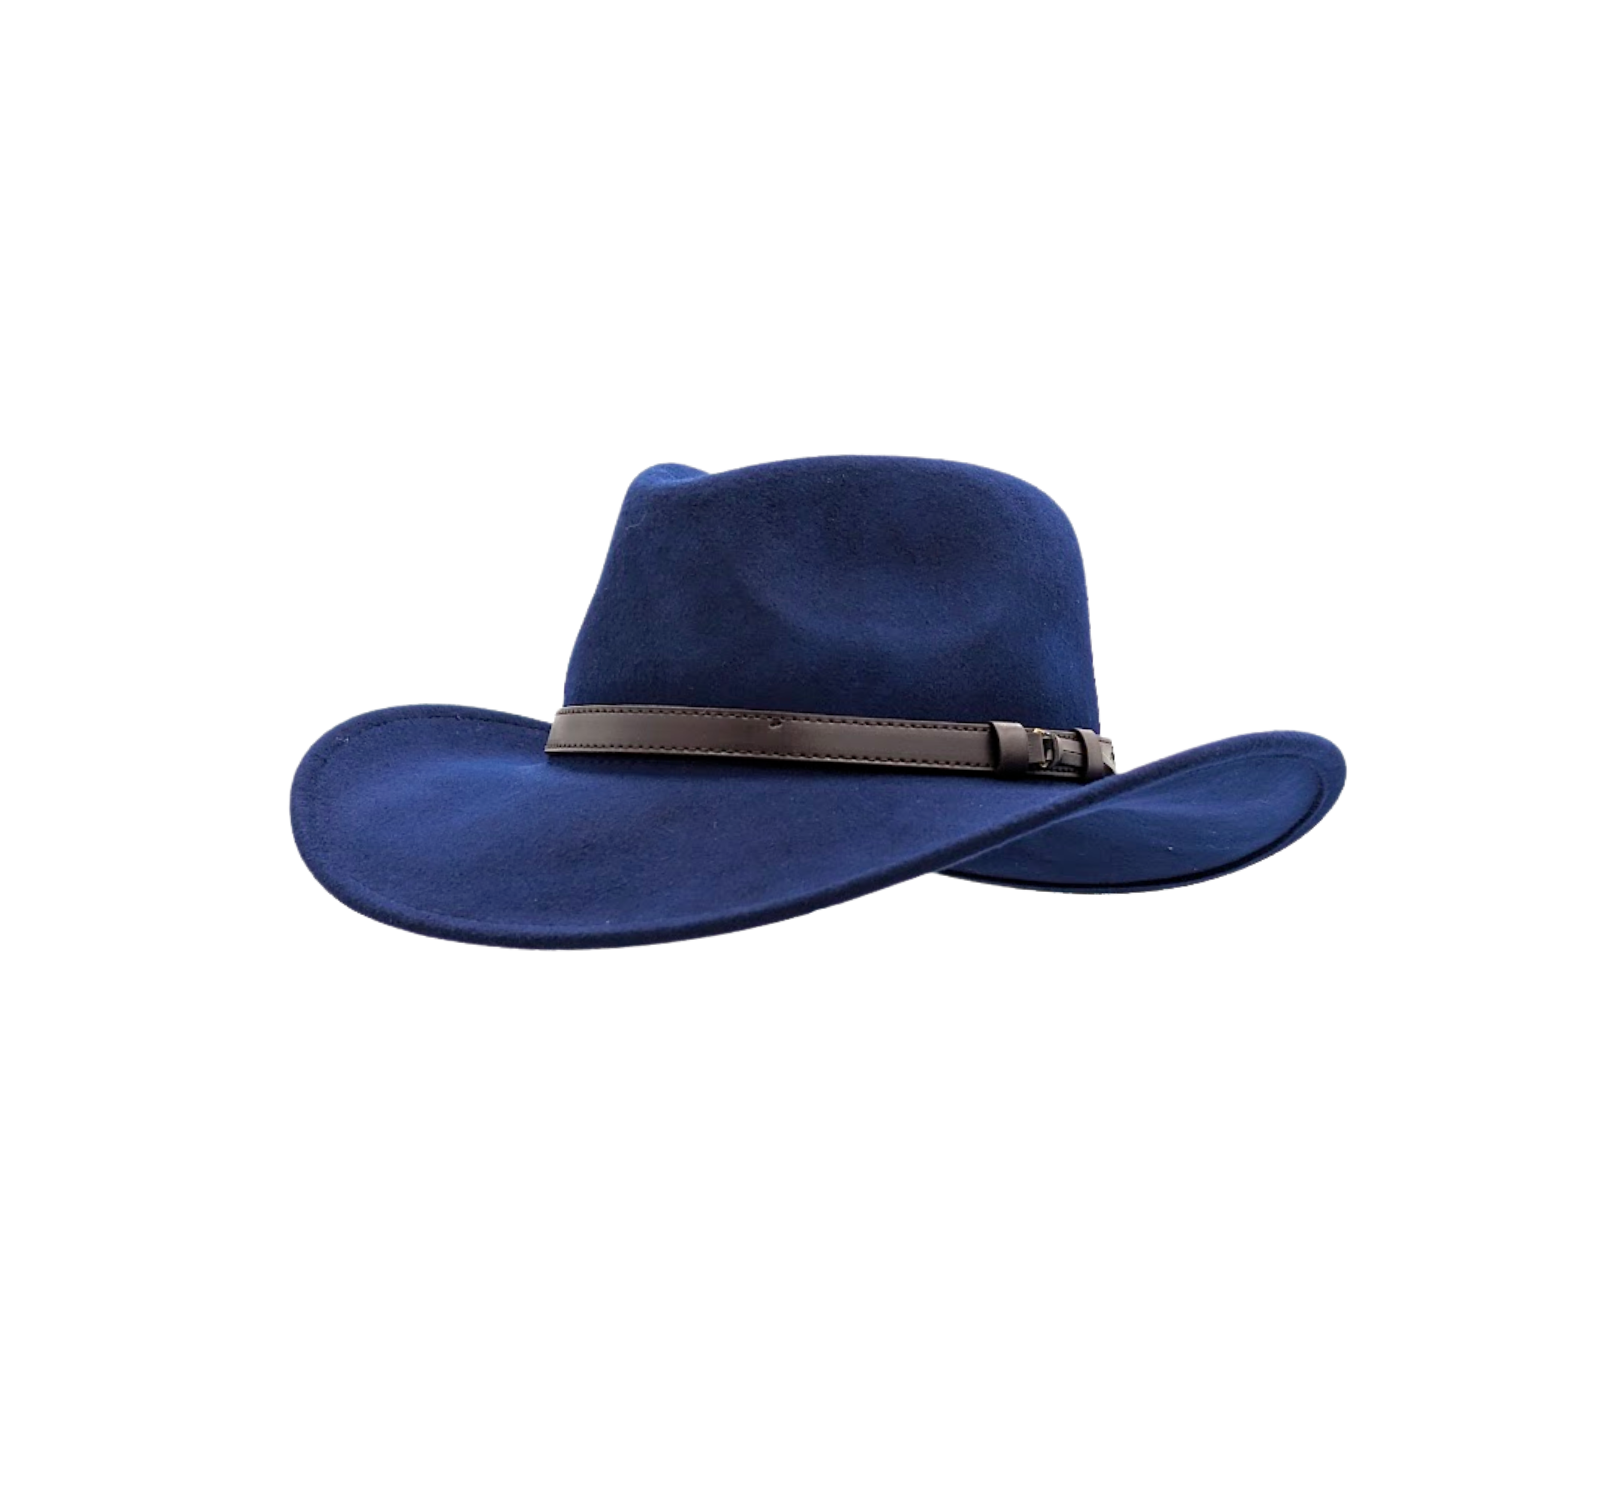 Stansmore Felt Cowboy Hat